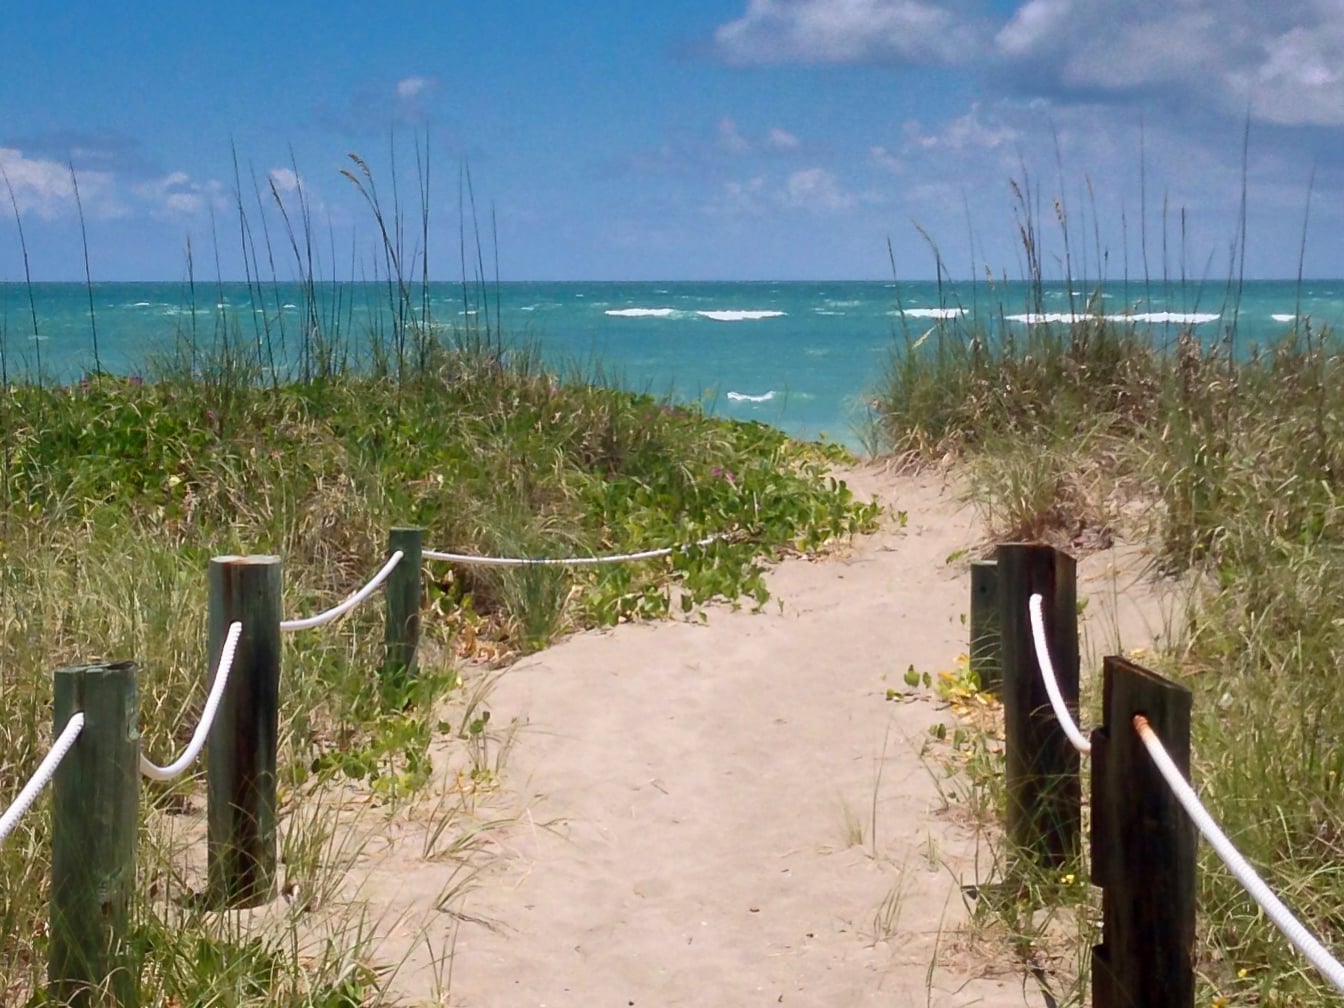 A beach access point in New Smyrna Beach, Florida